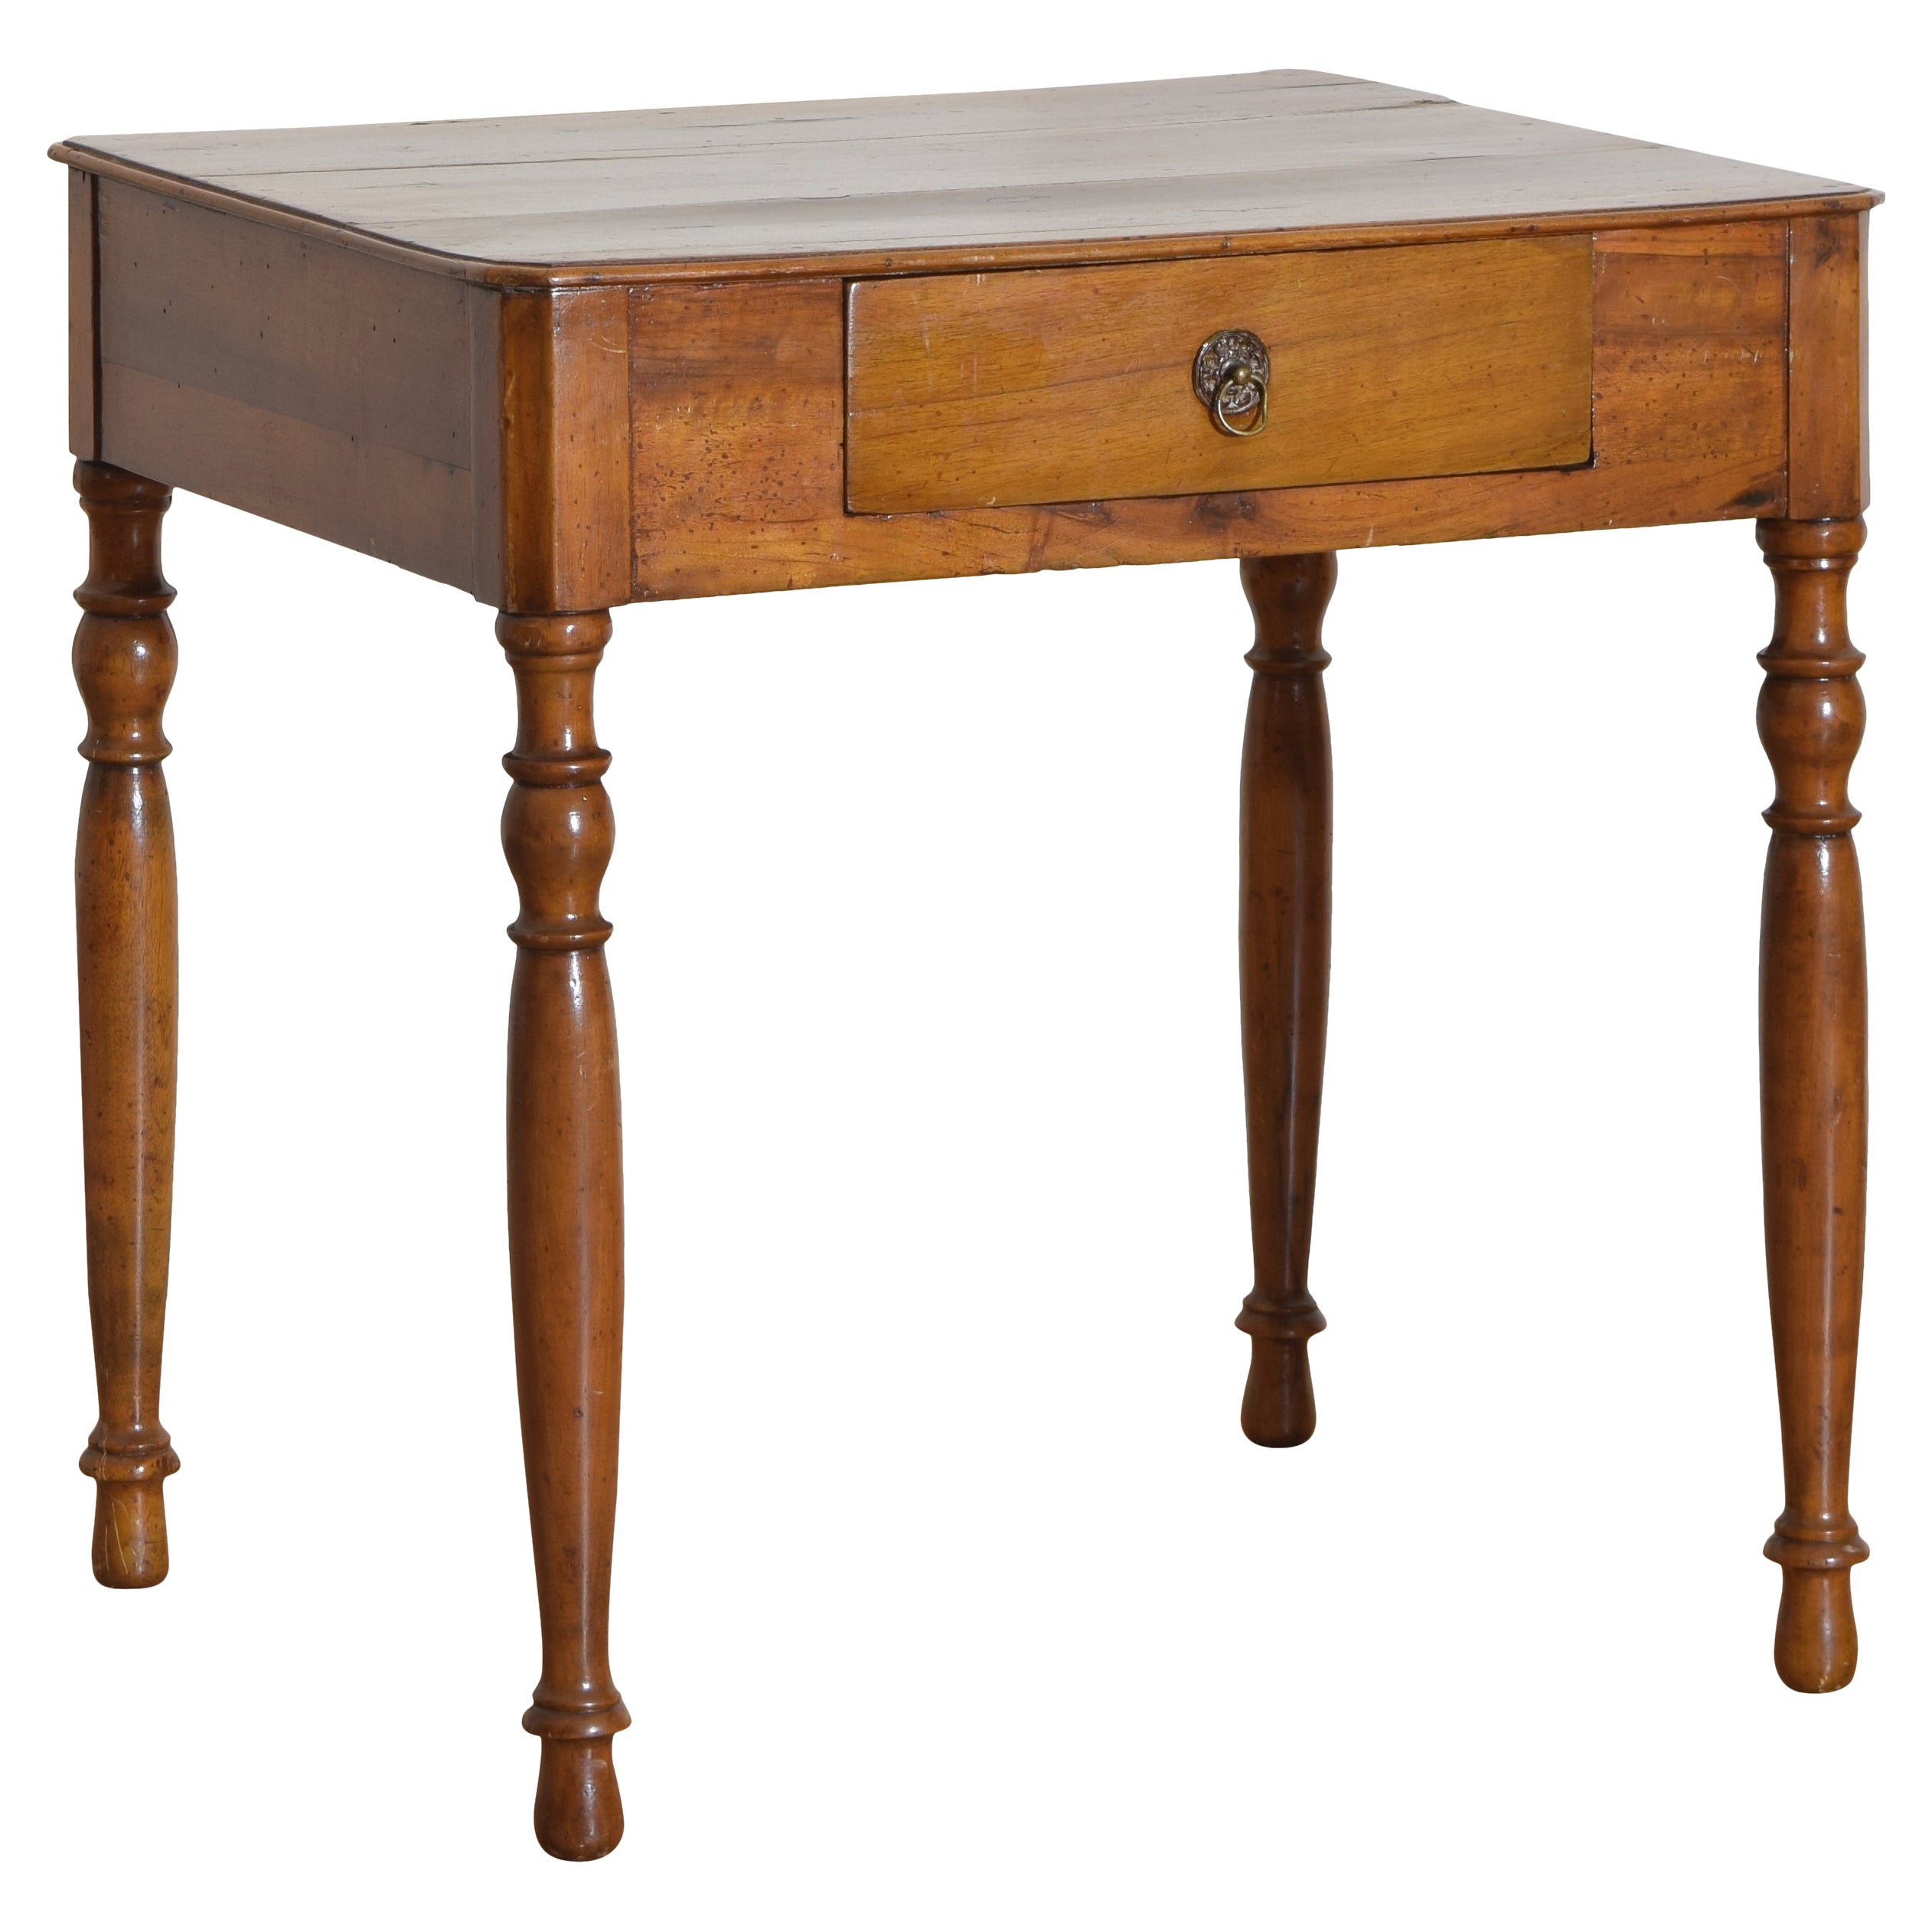 Italian, Tuscany, Light Walnut 1-Drawer Side Table, 2nd quarter 19th century